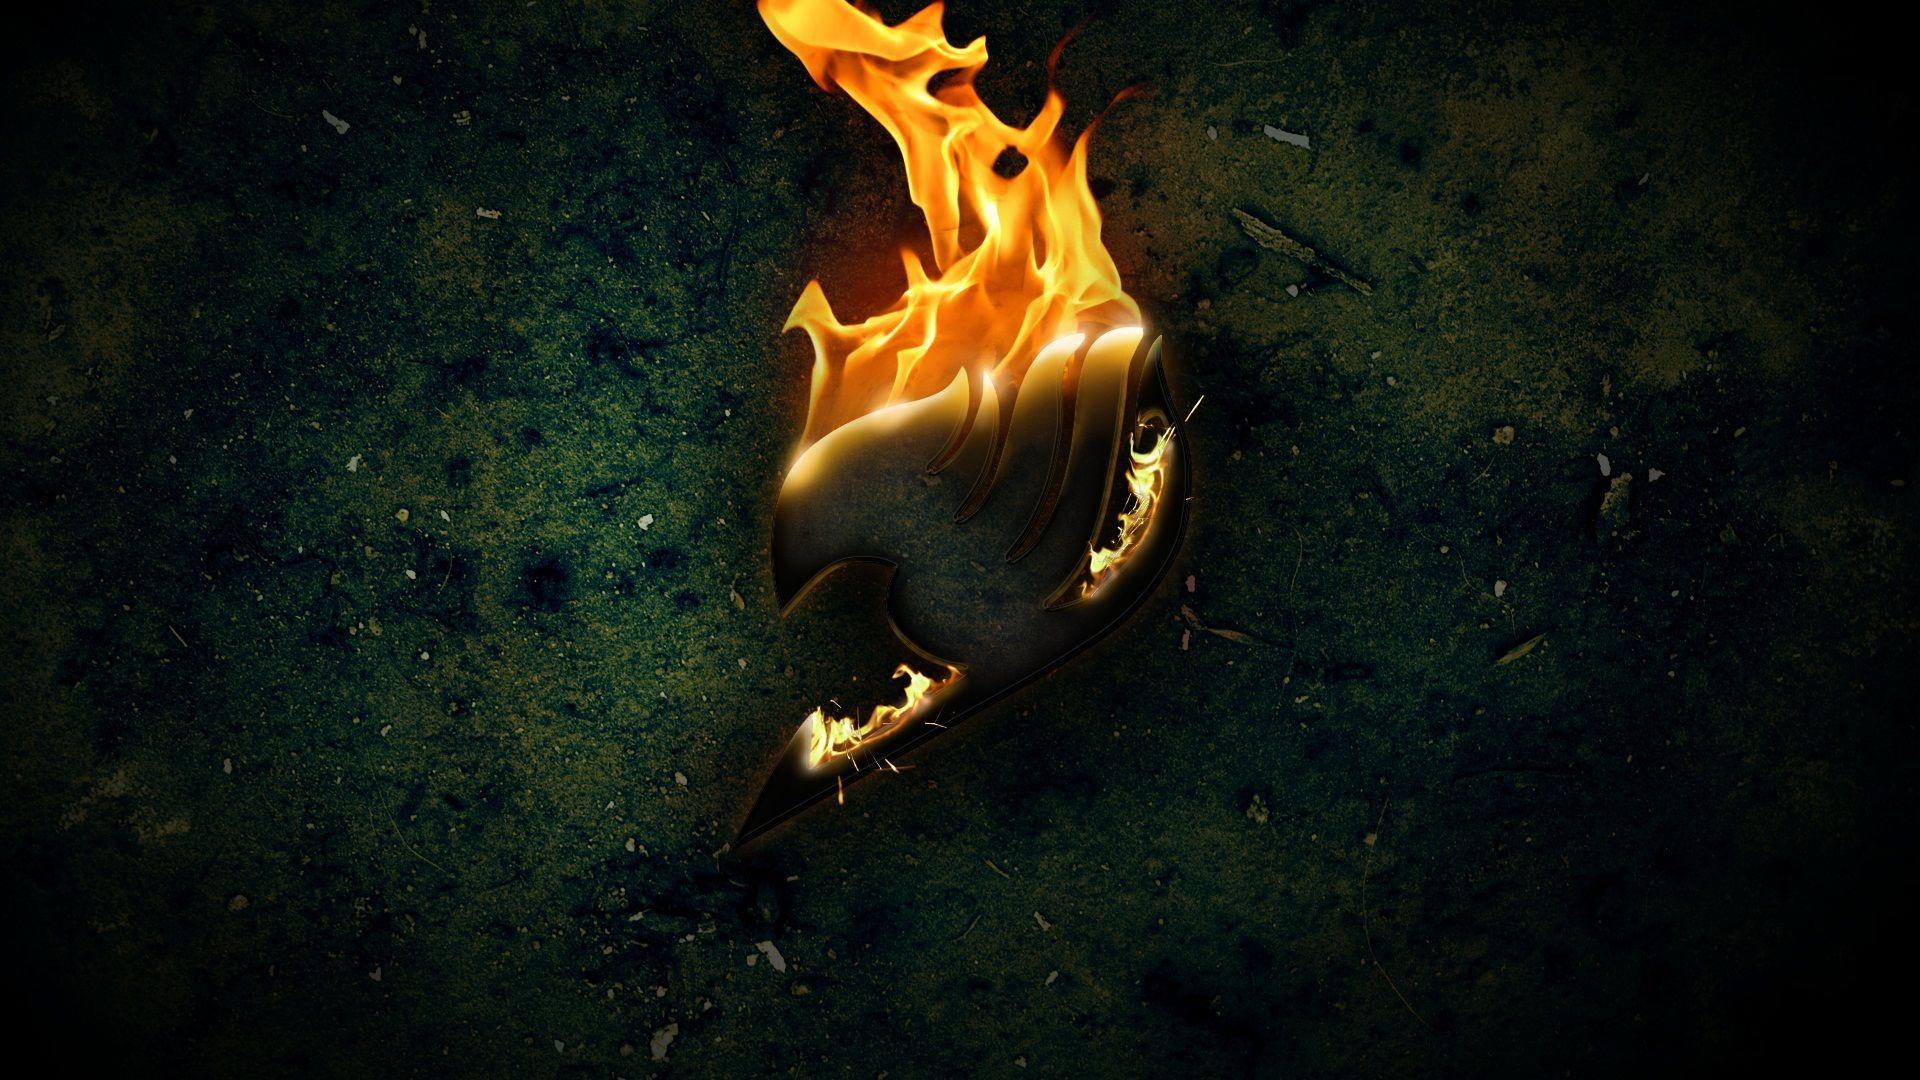 Fairy Tail Logo on Fire Wallpaper. Fairy Tail. Fairy